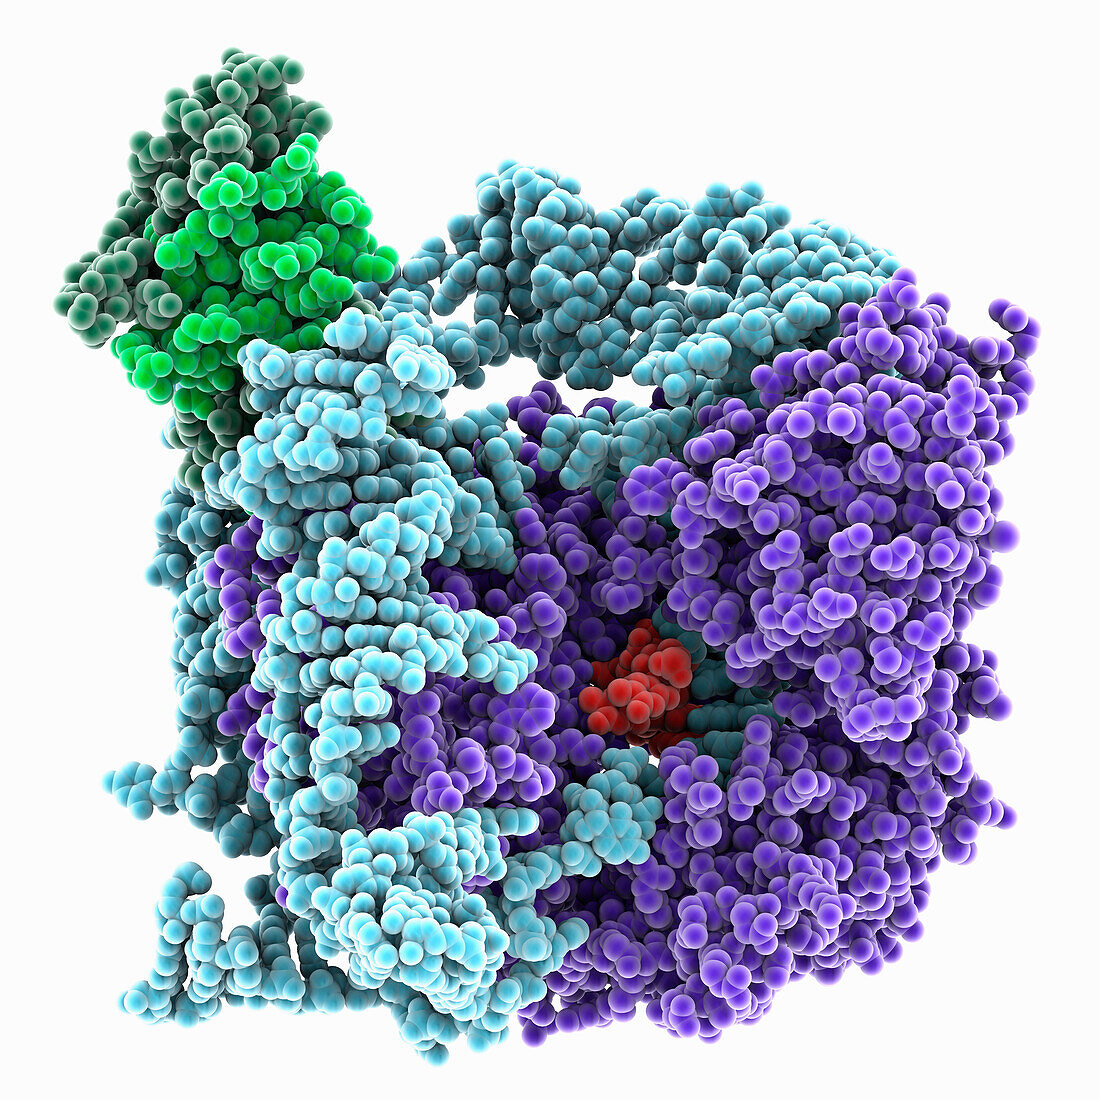 Human telomerase RNP with histones, molecular model